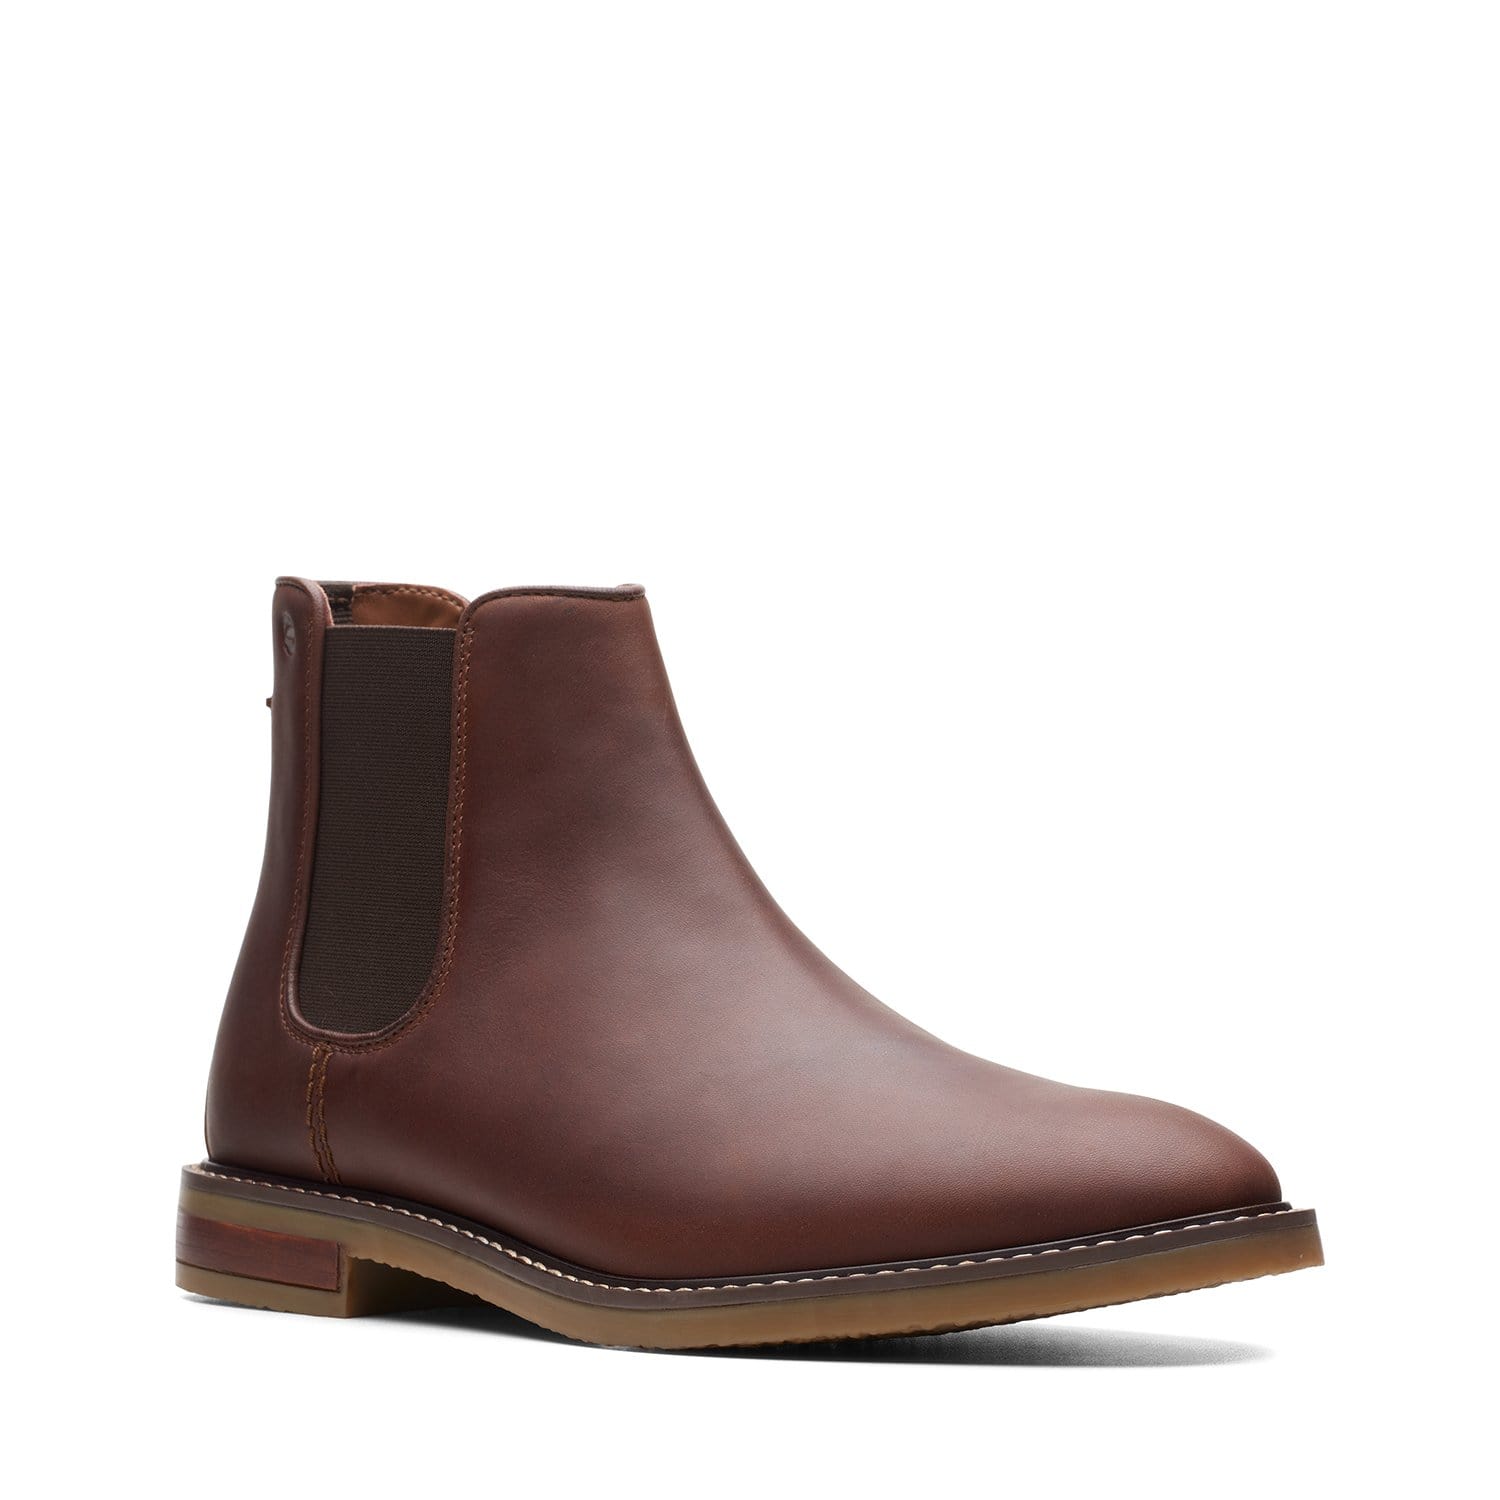 Clarks Jaxen Chelsea - Boots - Tan Leather - 261627427 - G Width (Standard Fit)